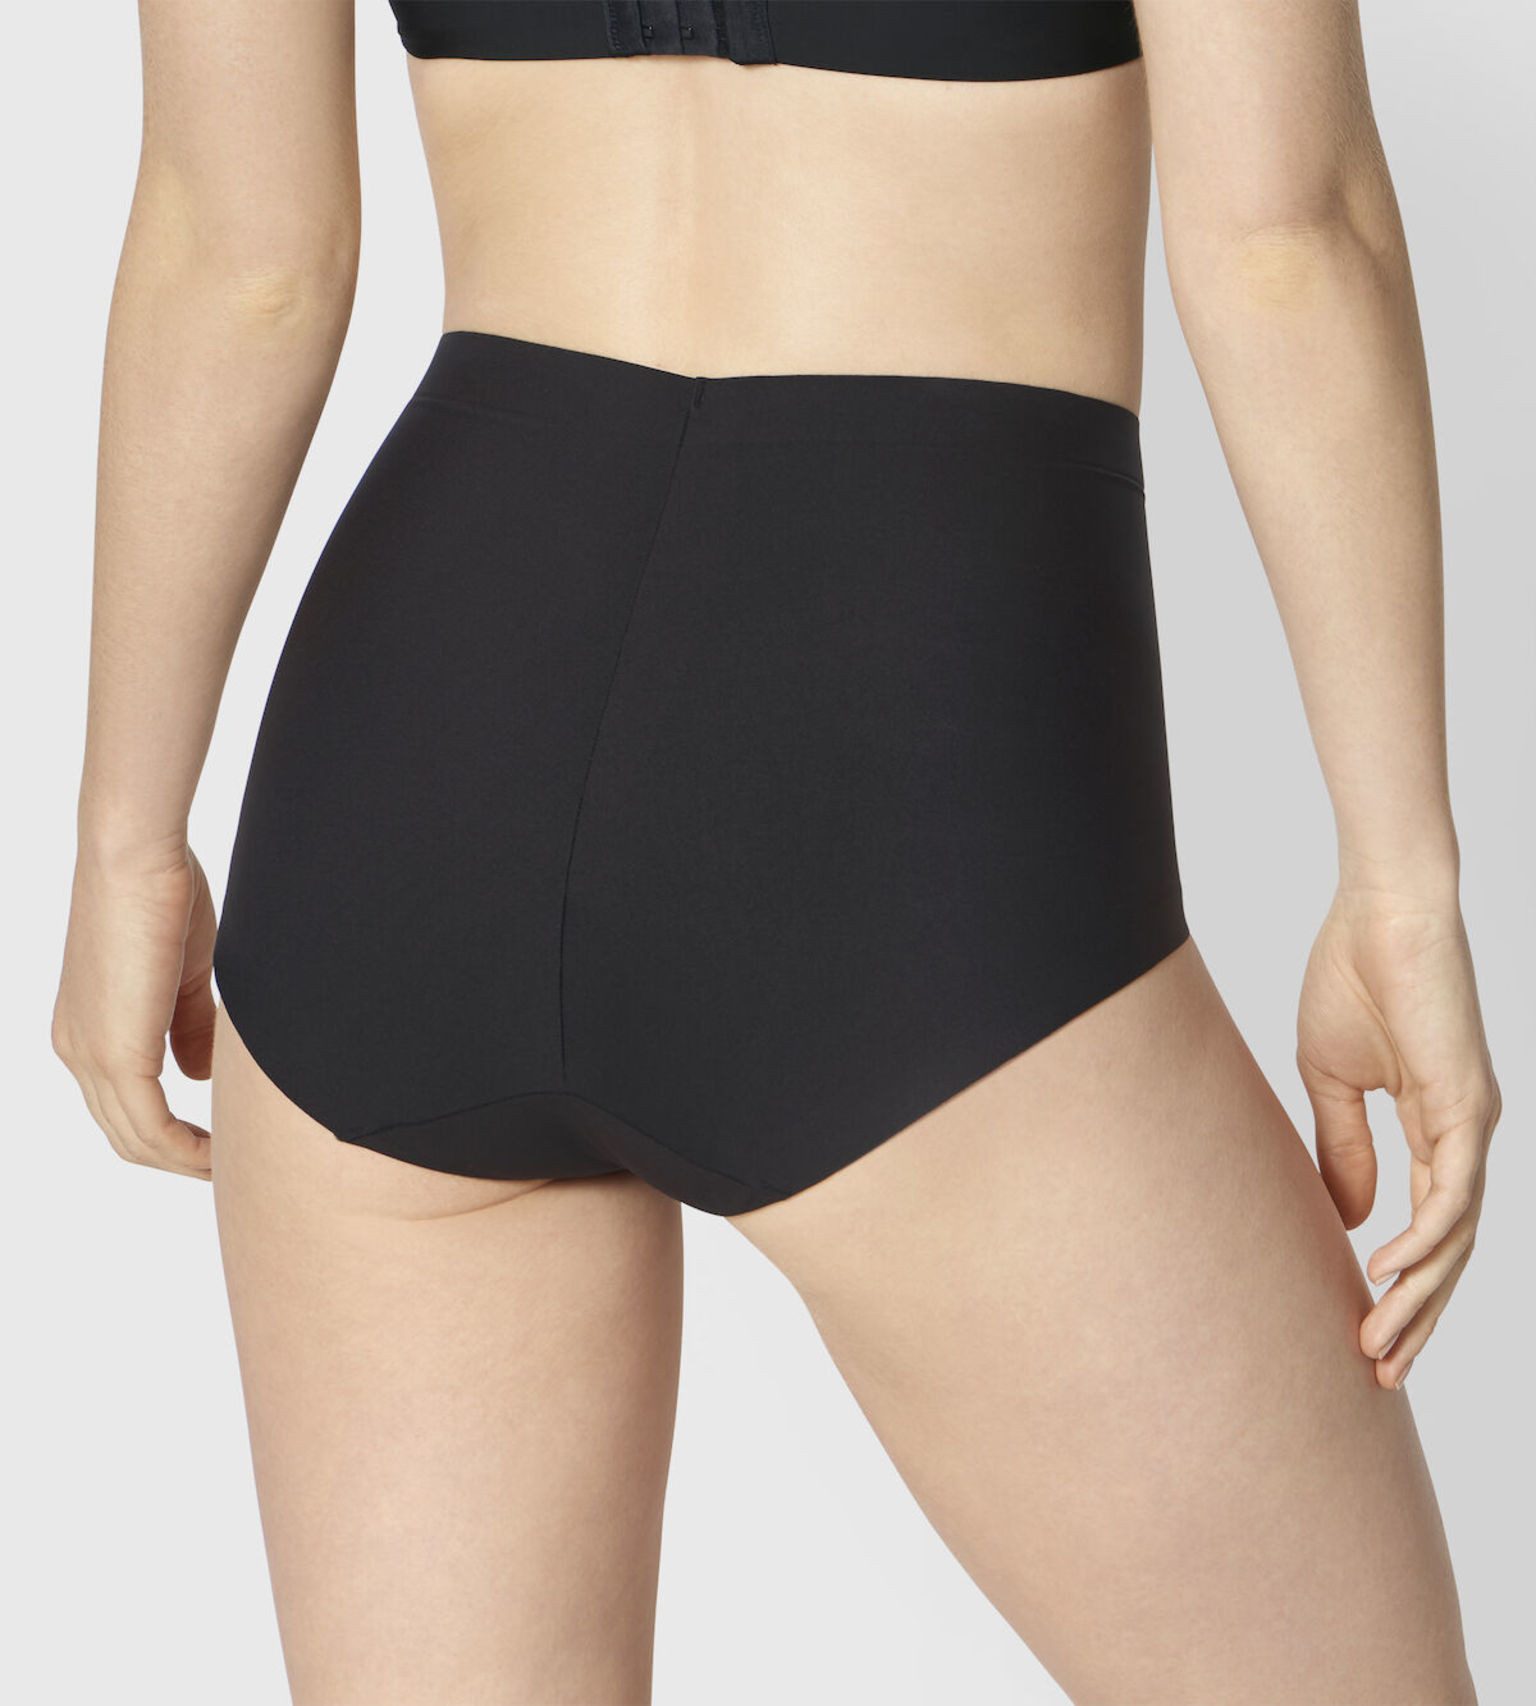 Kalhotky Medium Shaping Series Highwaist Panty černé - TRIUMPH BLACK S